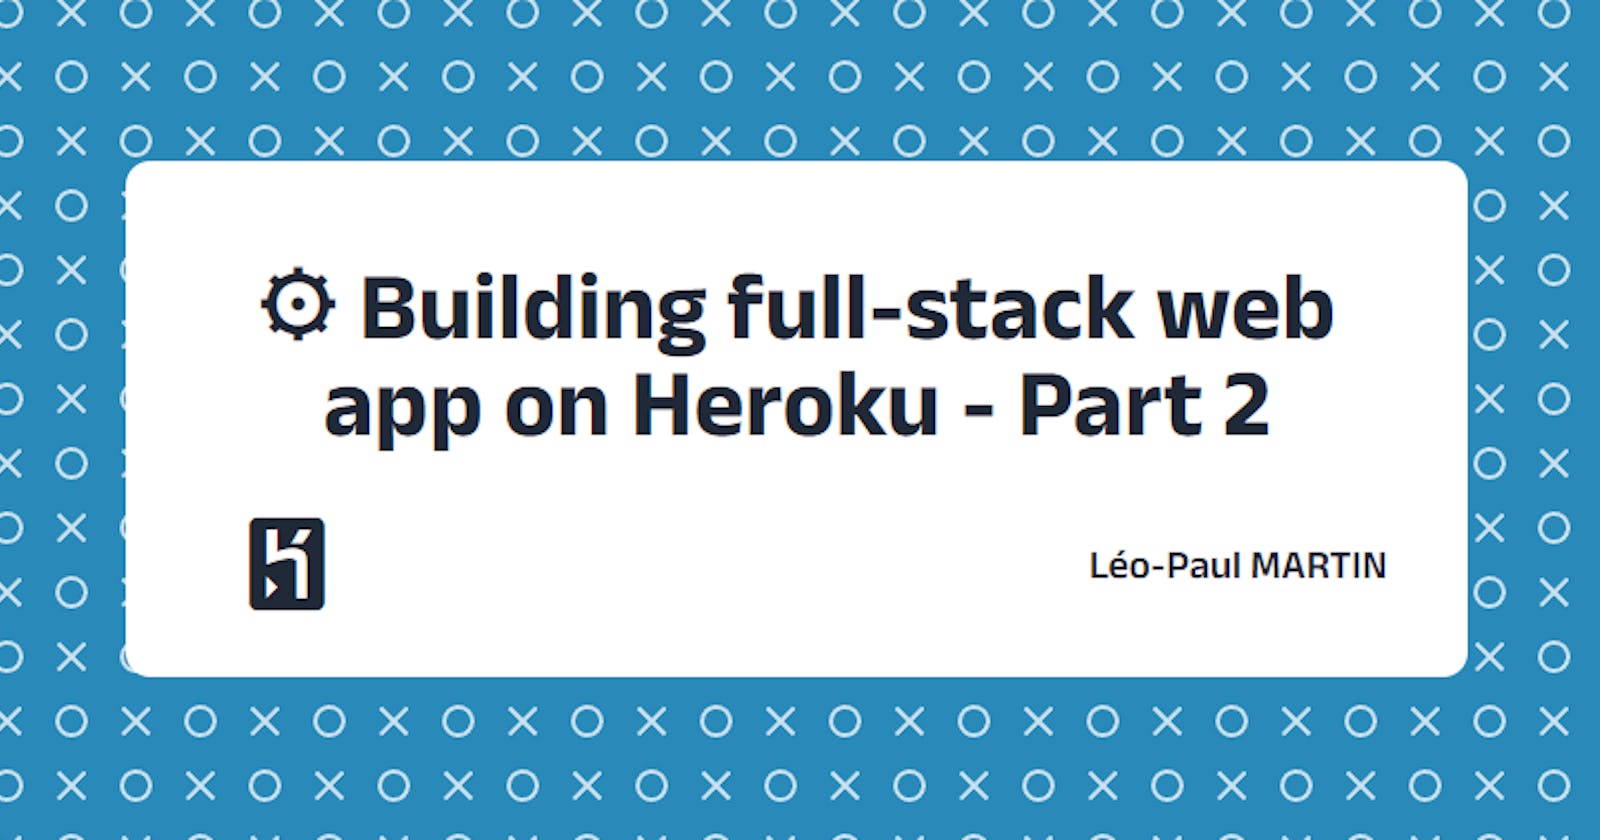 ⚙ Building full-stack web app on Heroku - Part 2